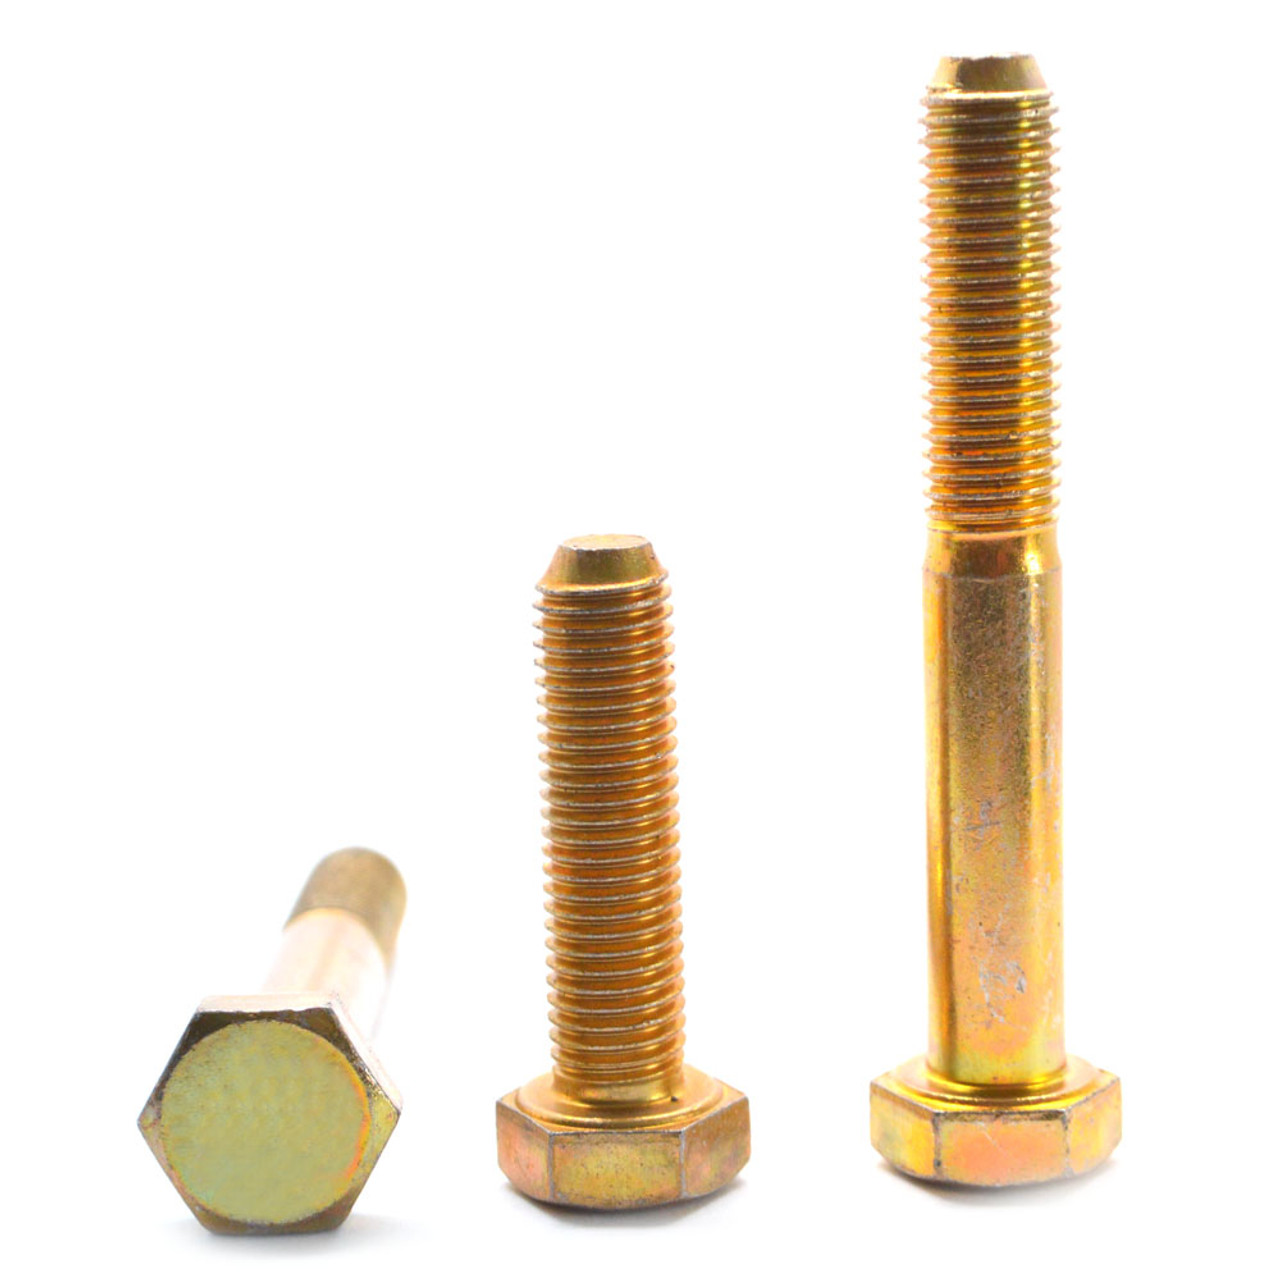 M14 x 2.00 x 100 MM Coarse Thread DIN 931 Class 10.9 Hex Cap Screw (Bolt) Medium Carbon Steel Yellow Zinc Plated